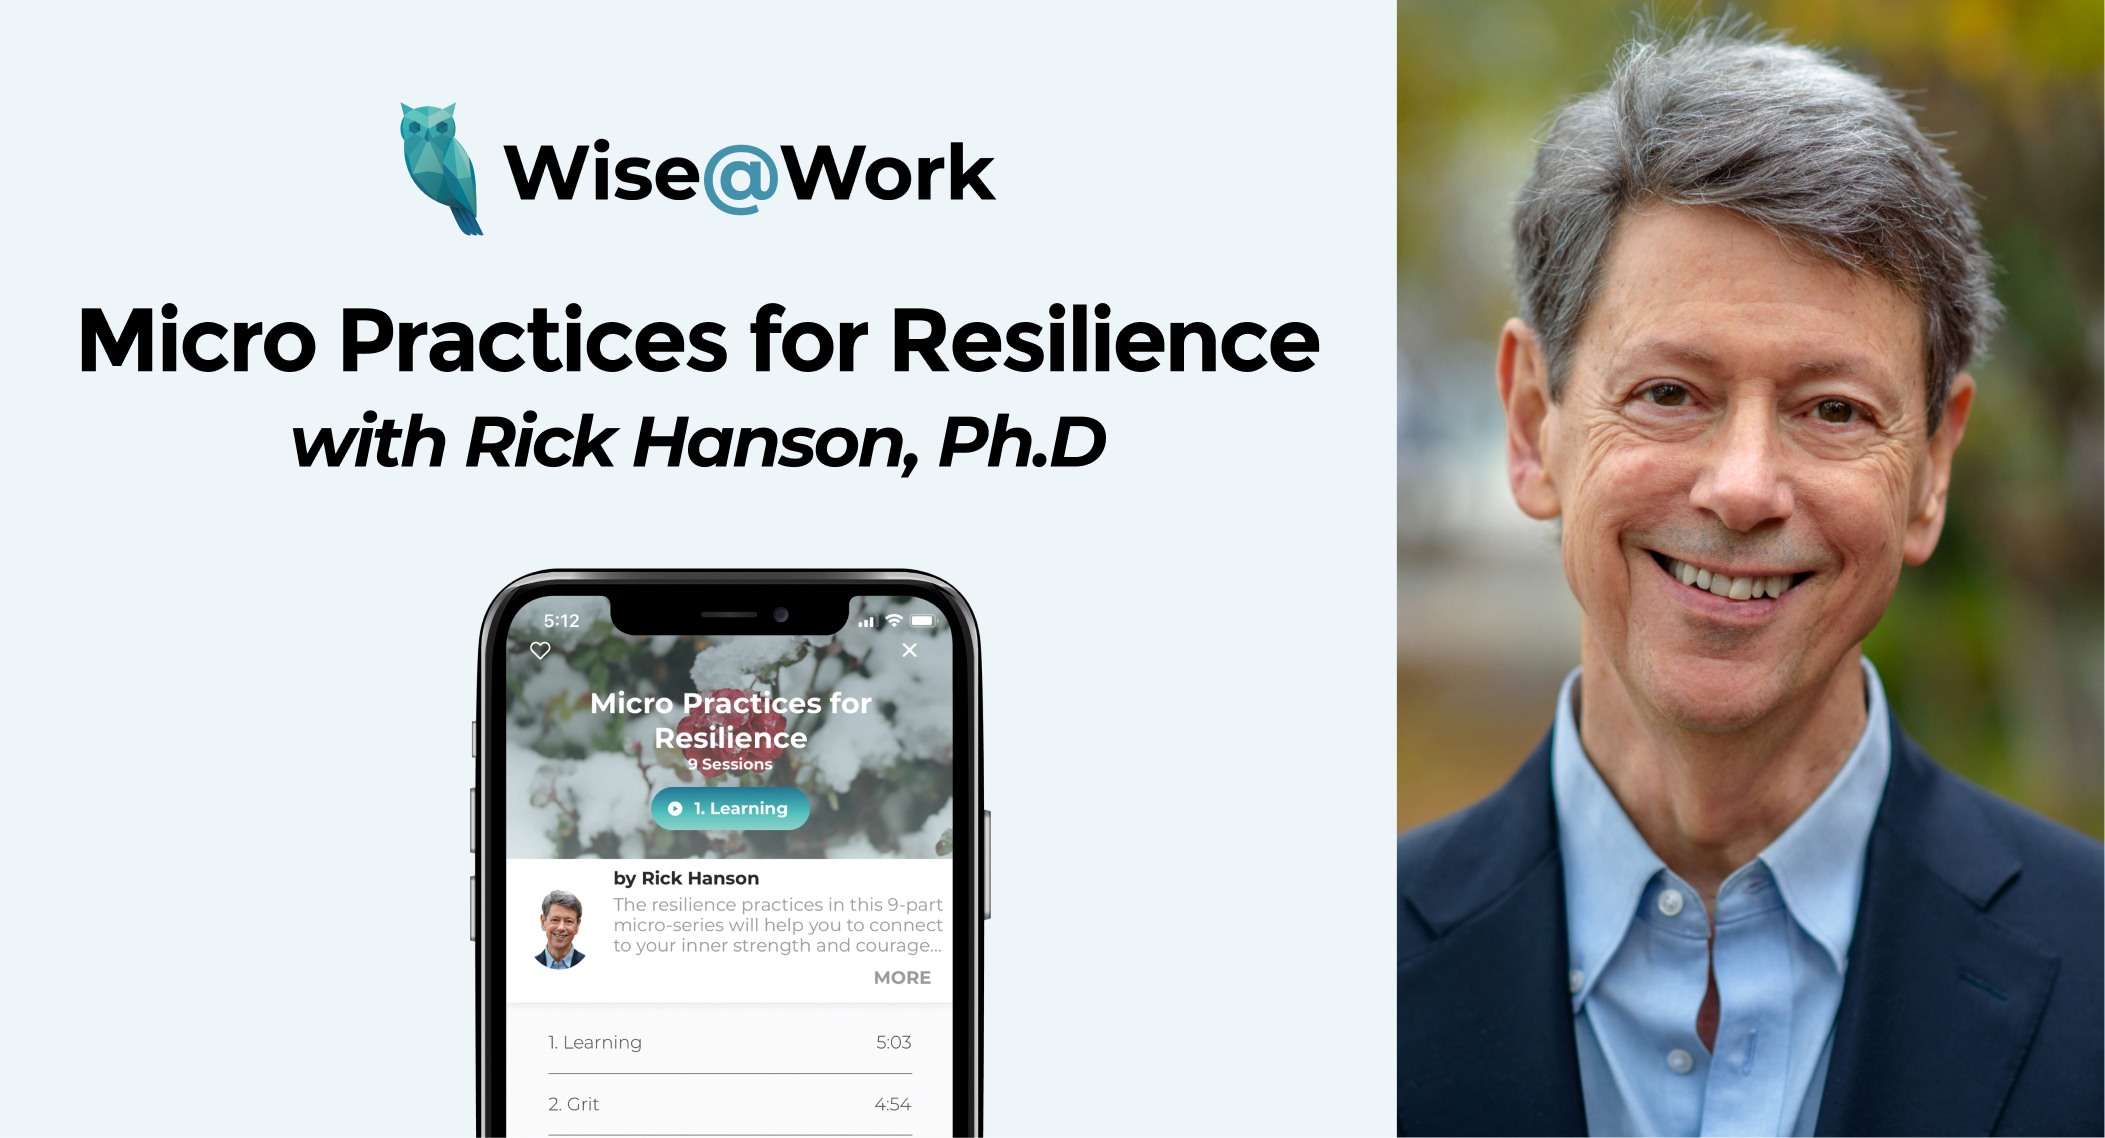 Rick Hanson on the Wise@Work App